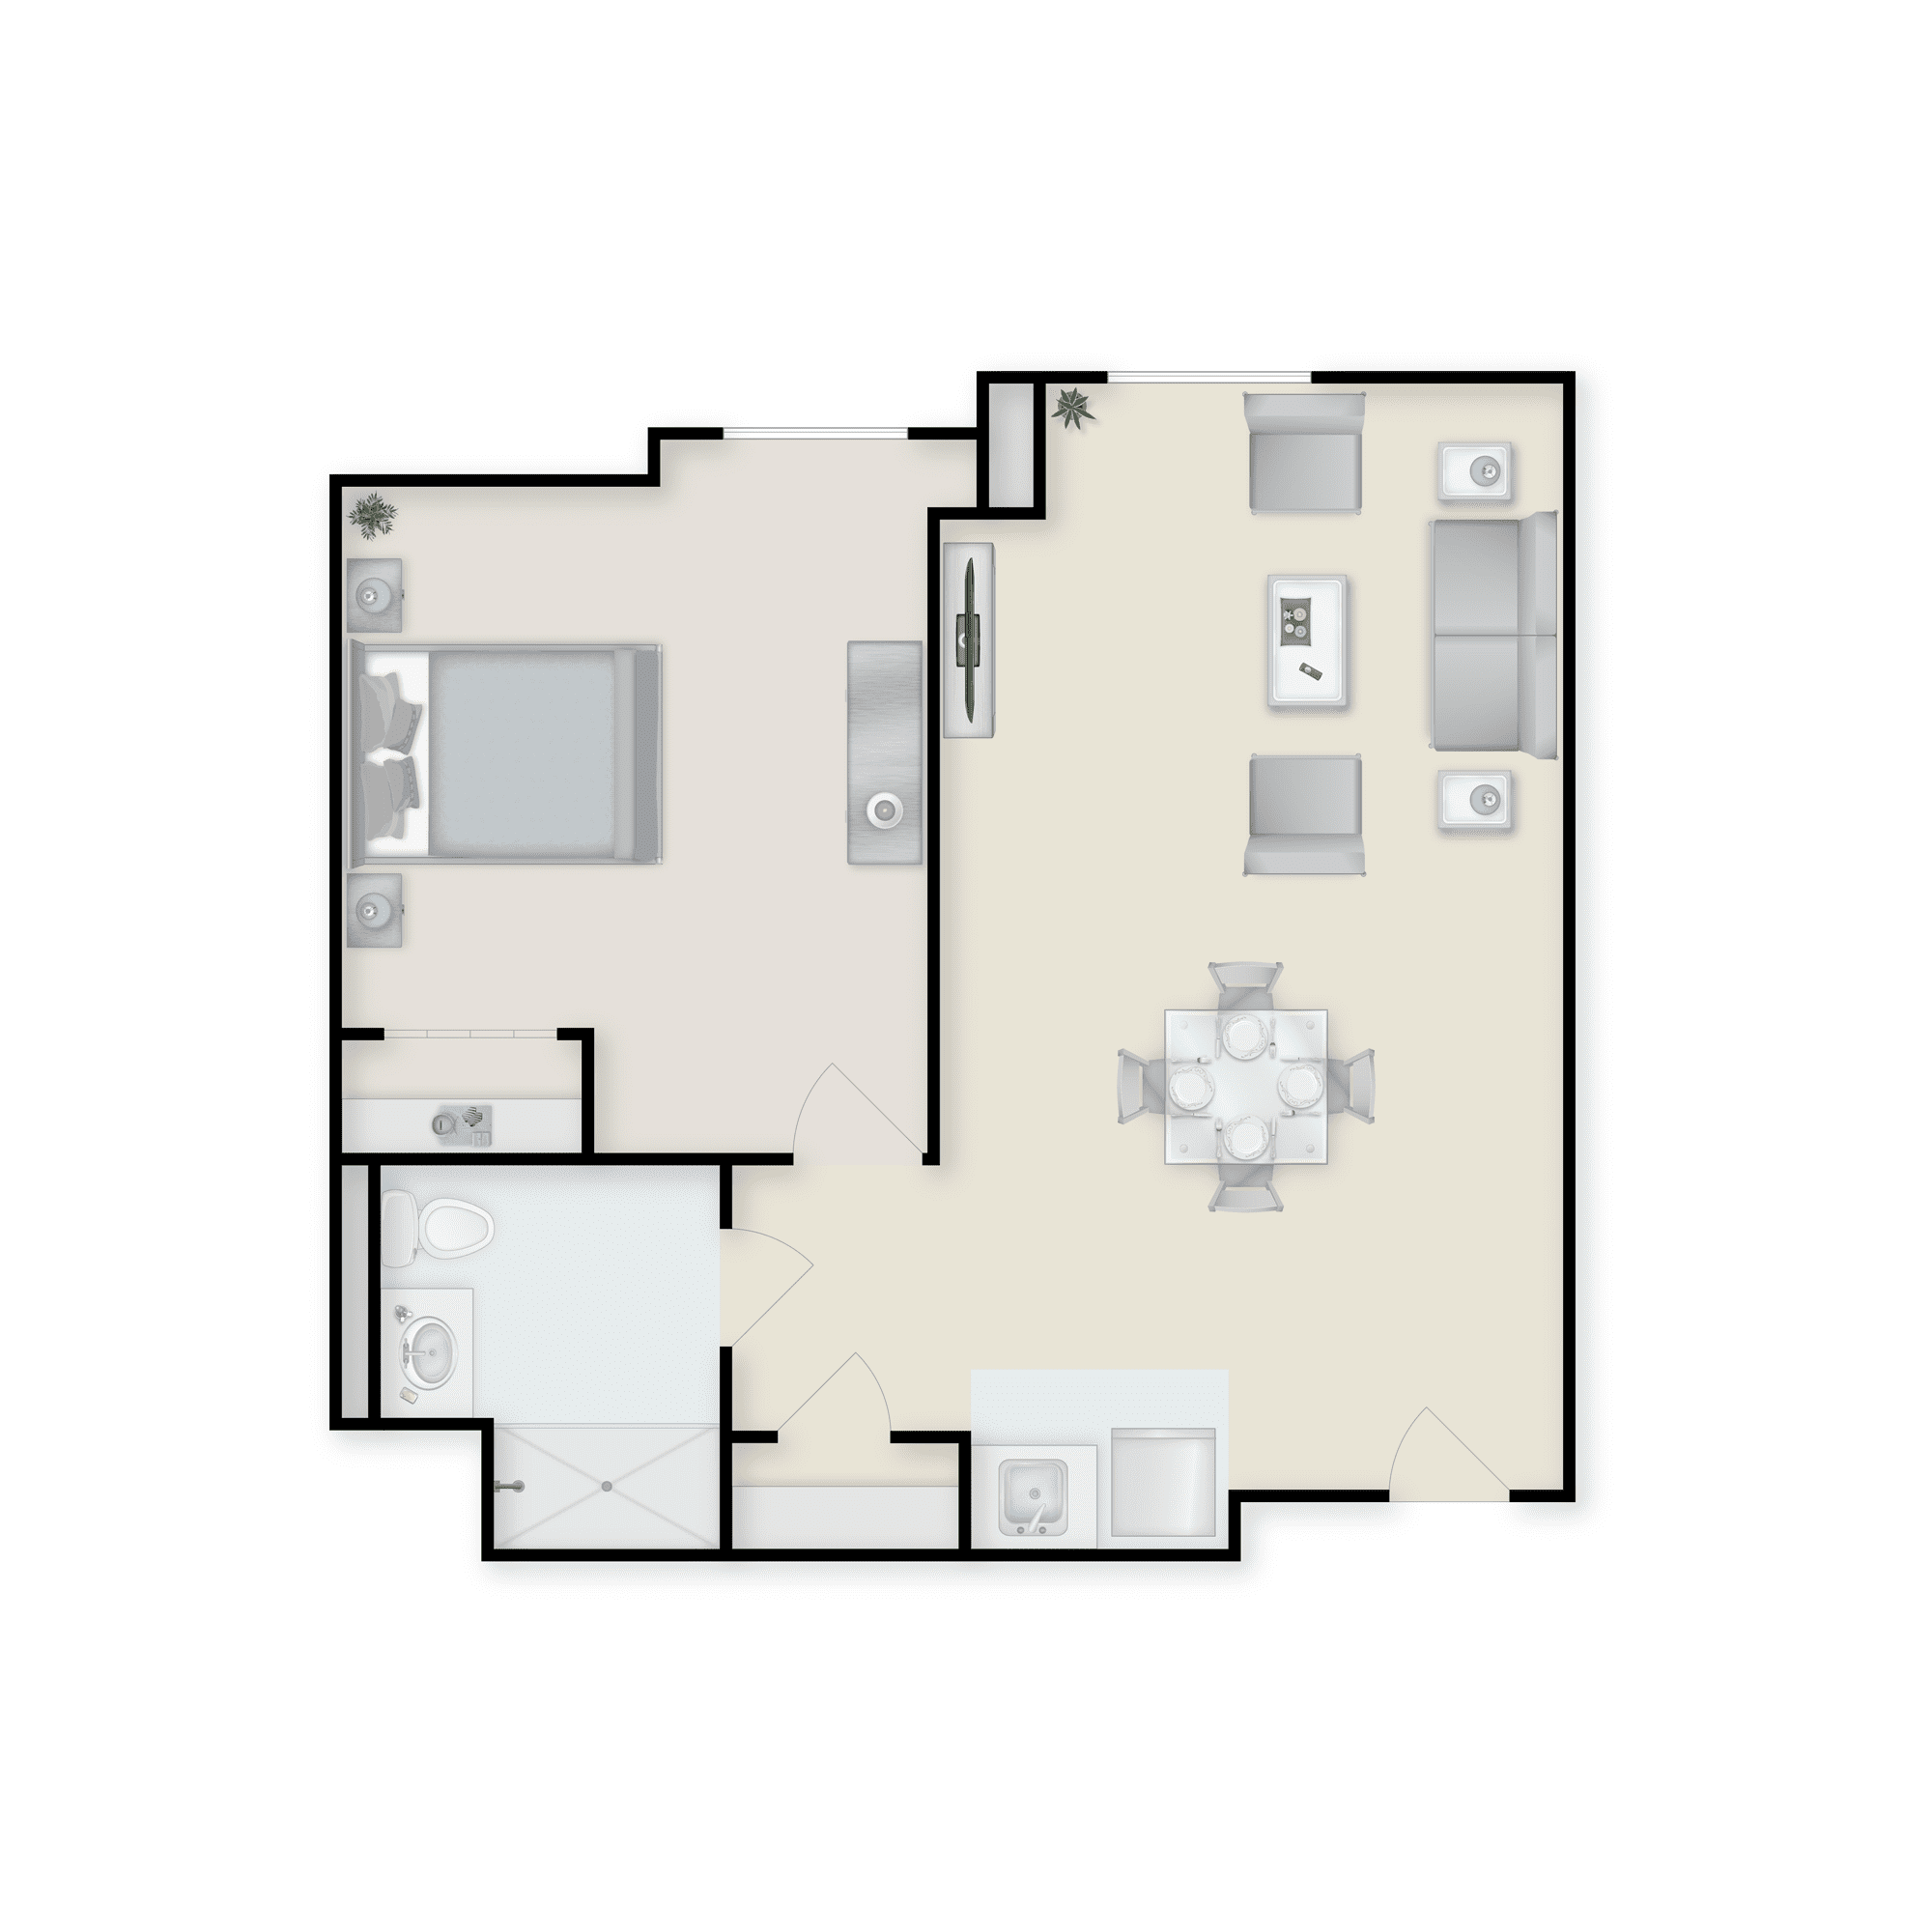 Charter Senior Living of Towson 1 bedroom apartment floor plan